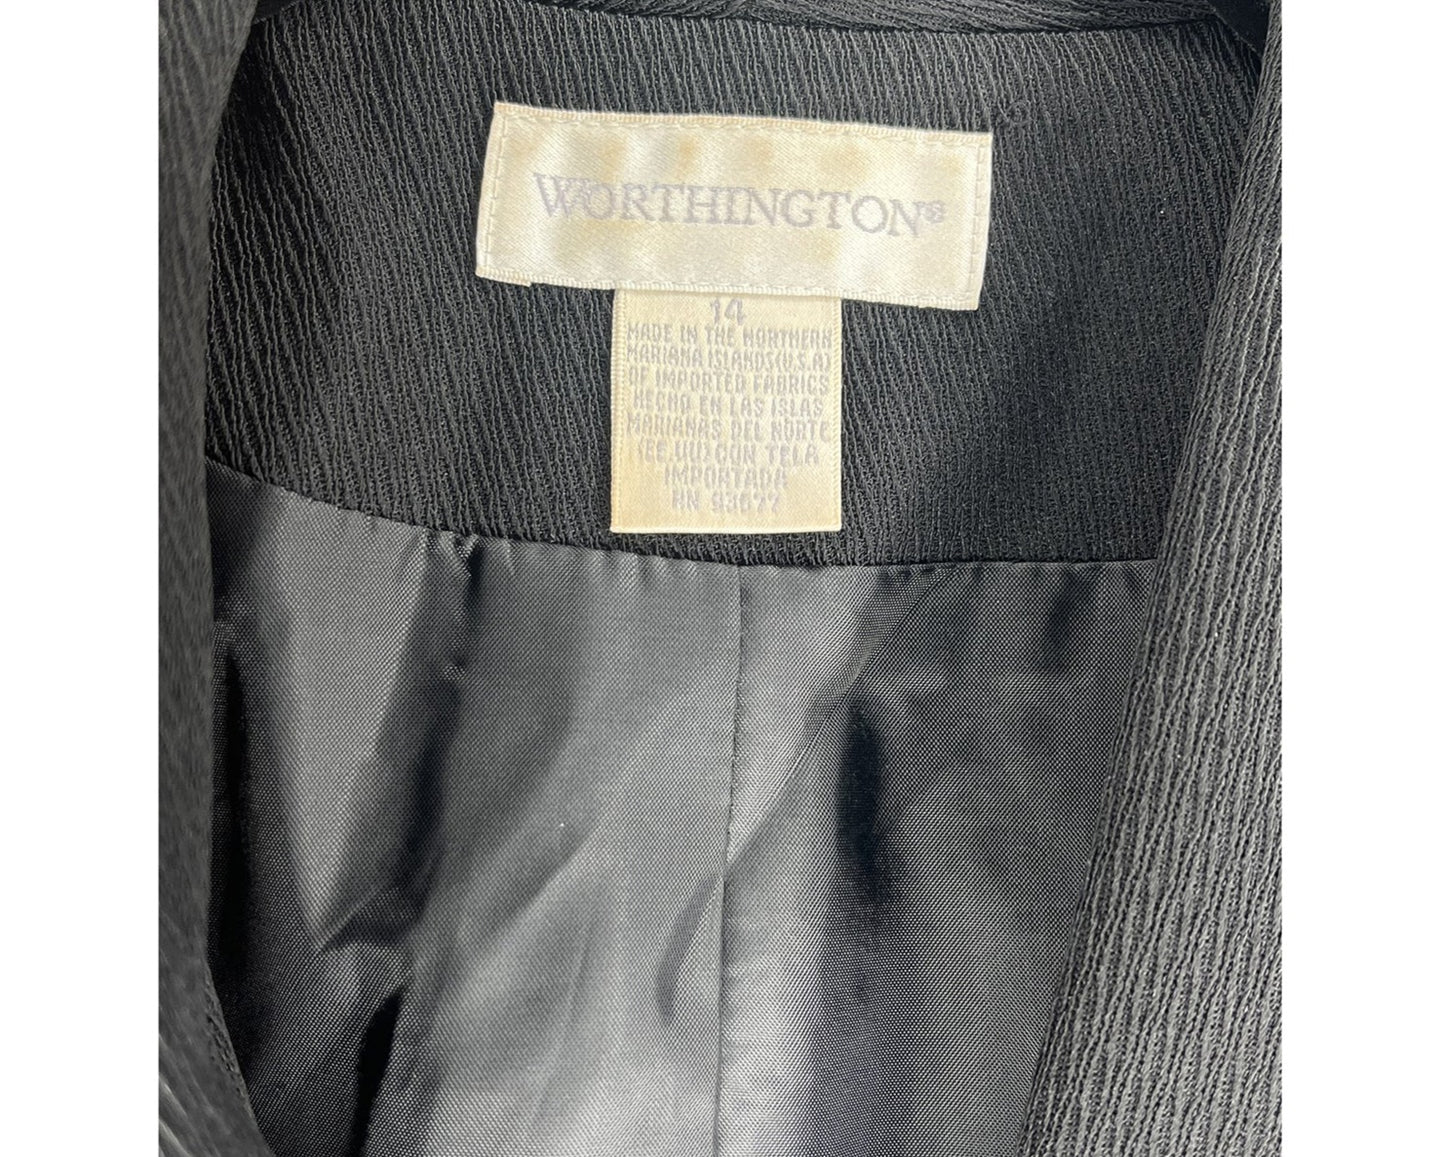 Worthington Blazer 3-Button Enclosure Textured Black Size 14 SKU 000413